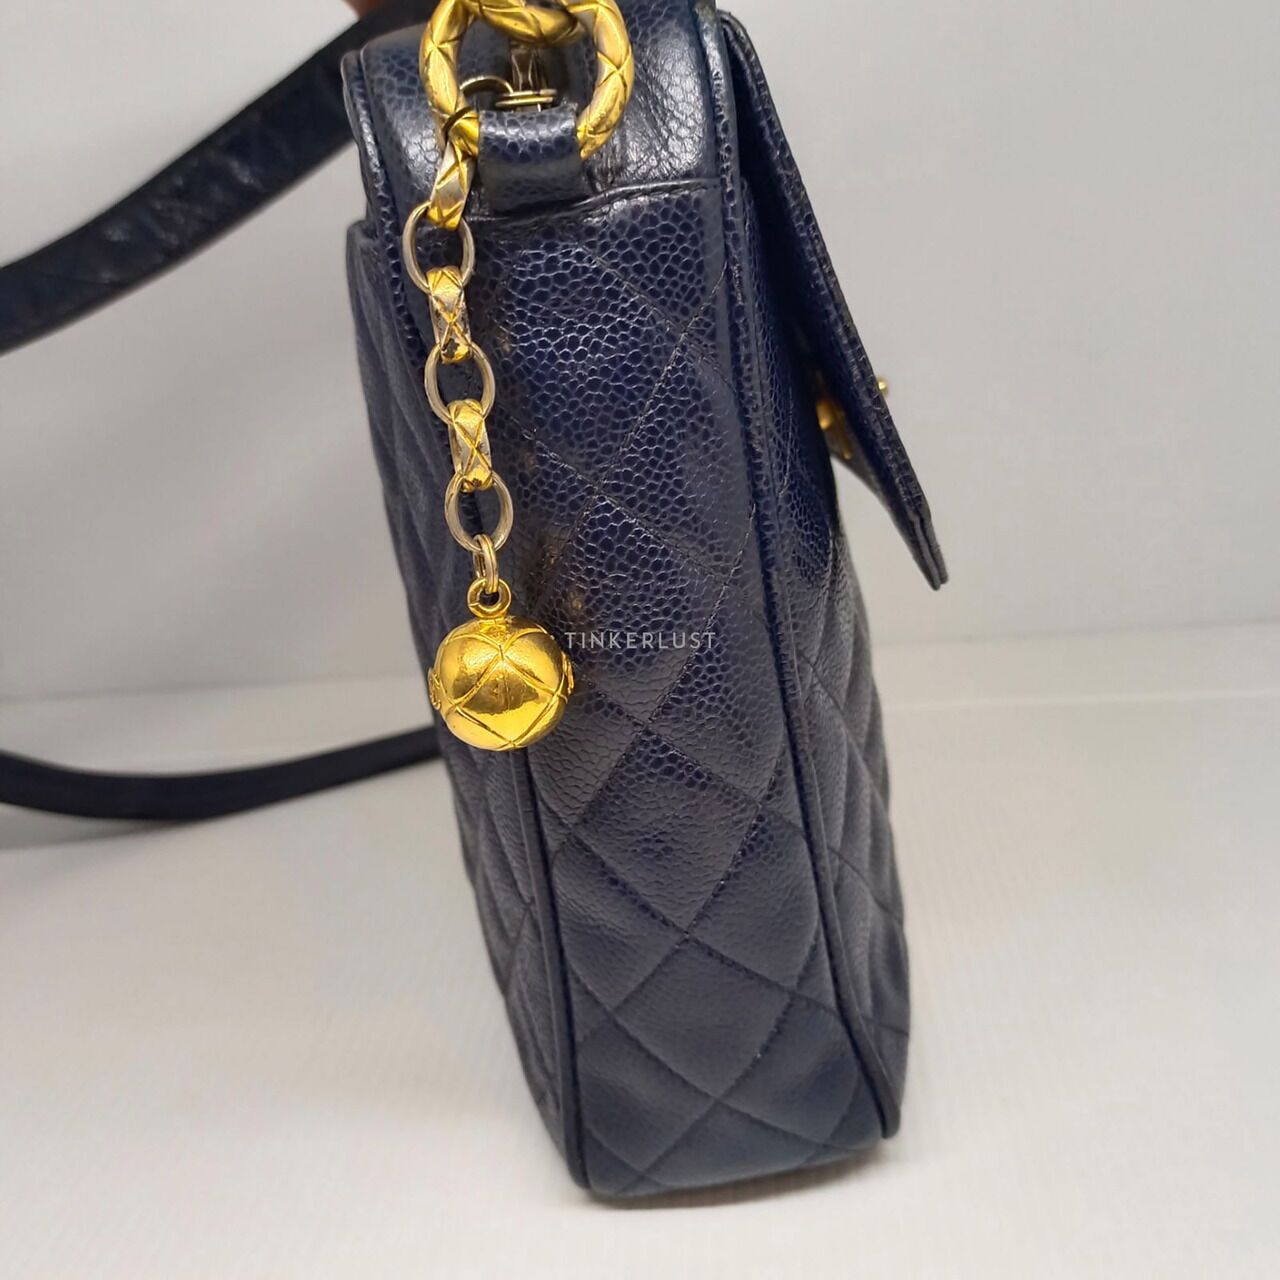 Chanel Navy Blue Caviar GHW Sling Bag 